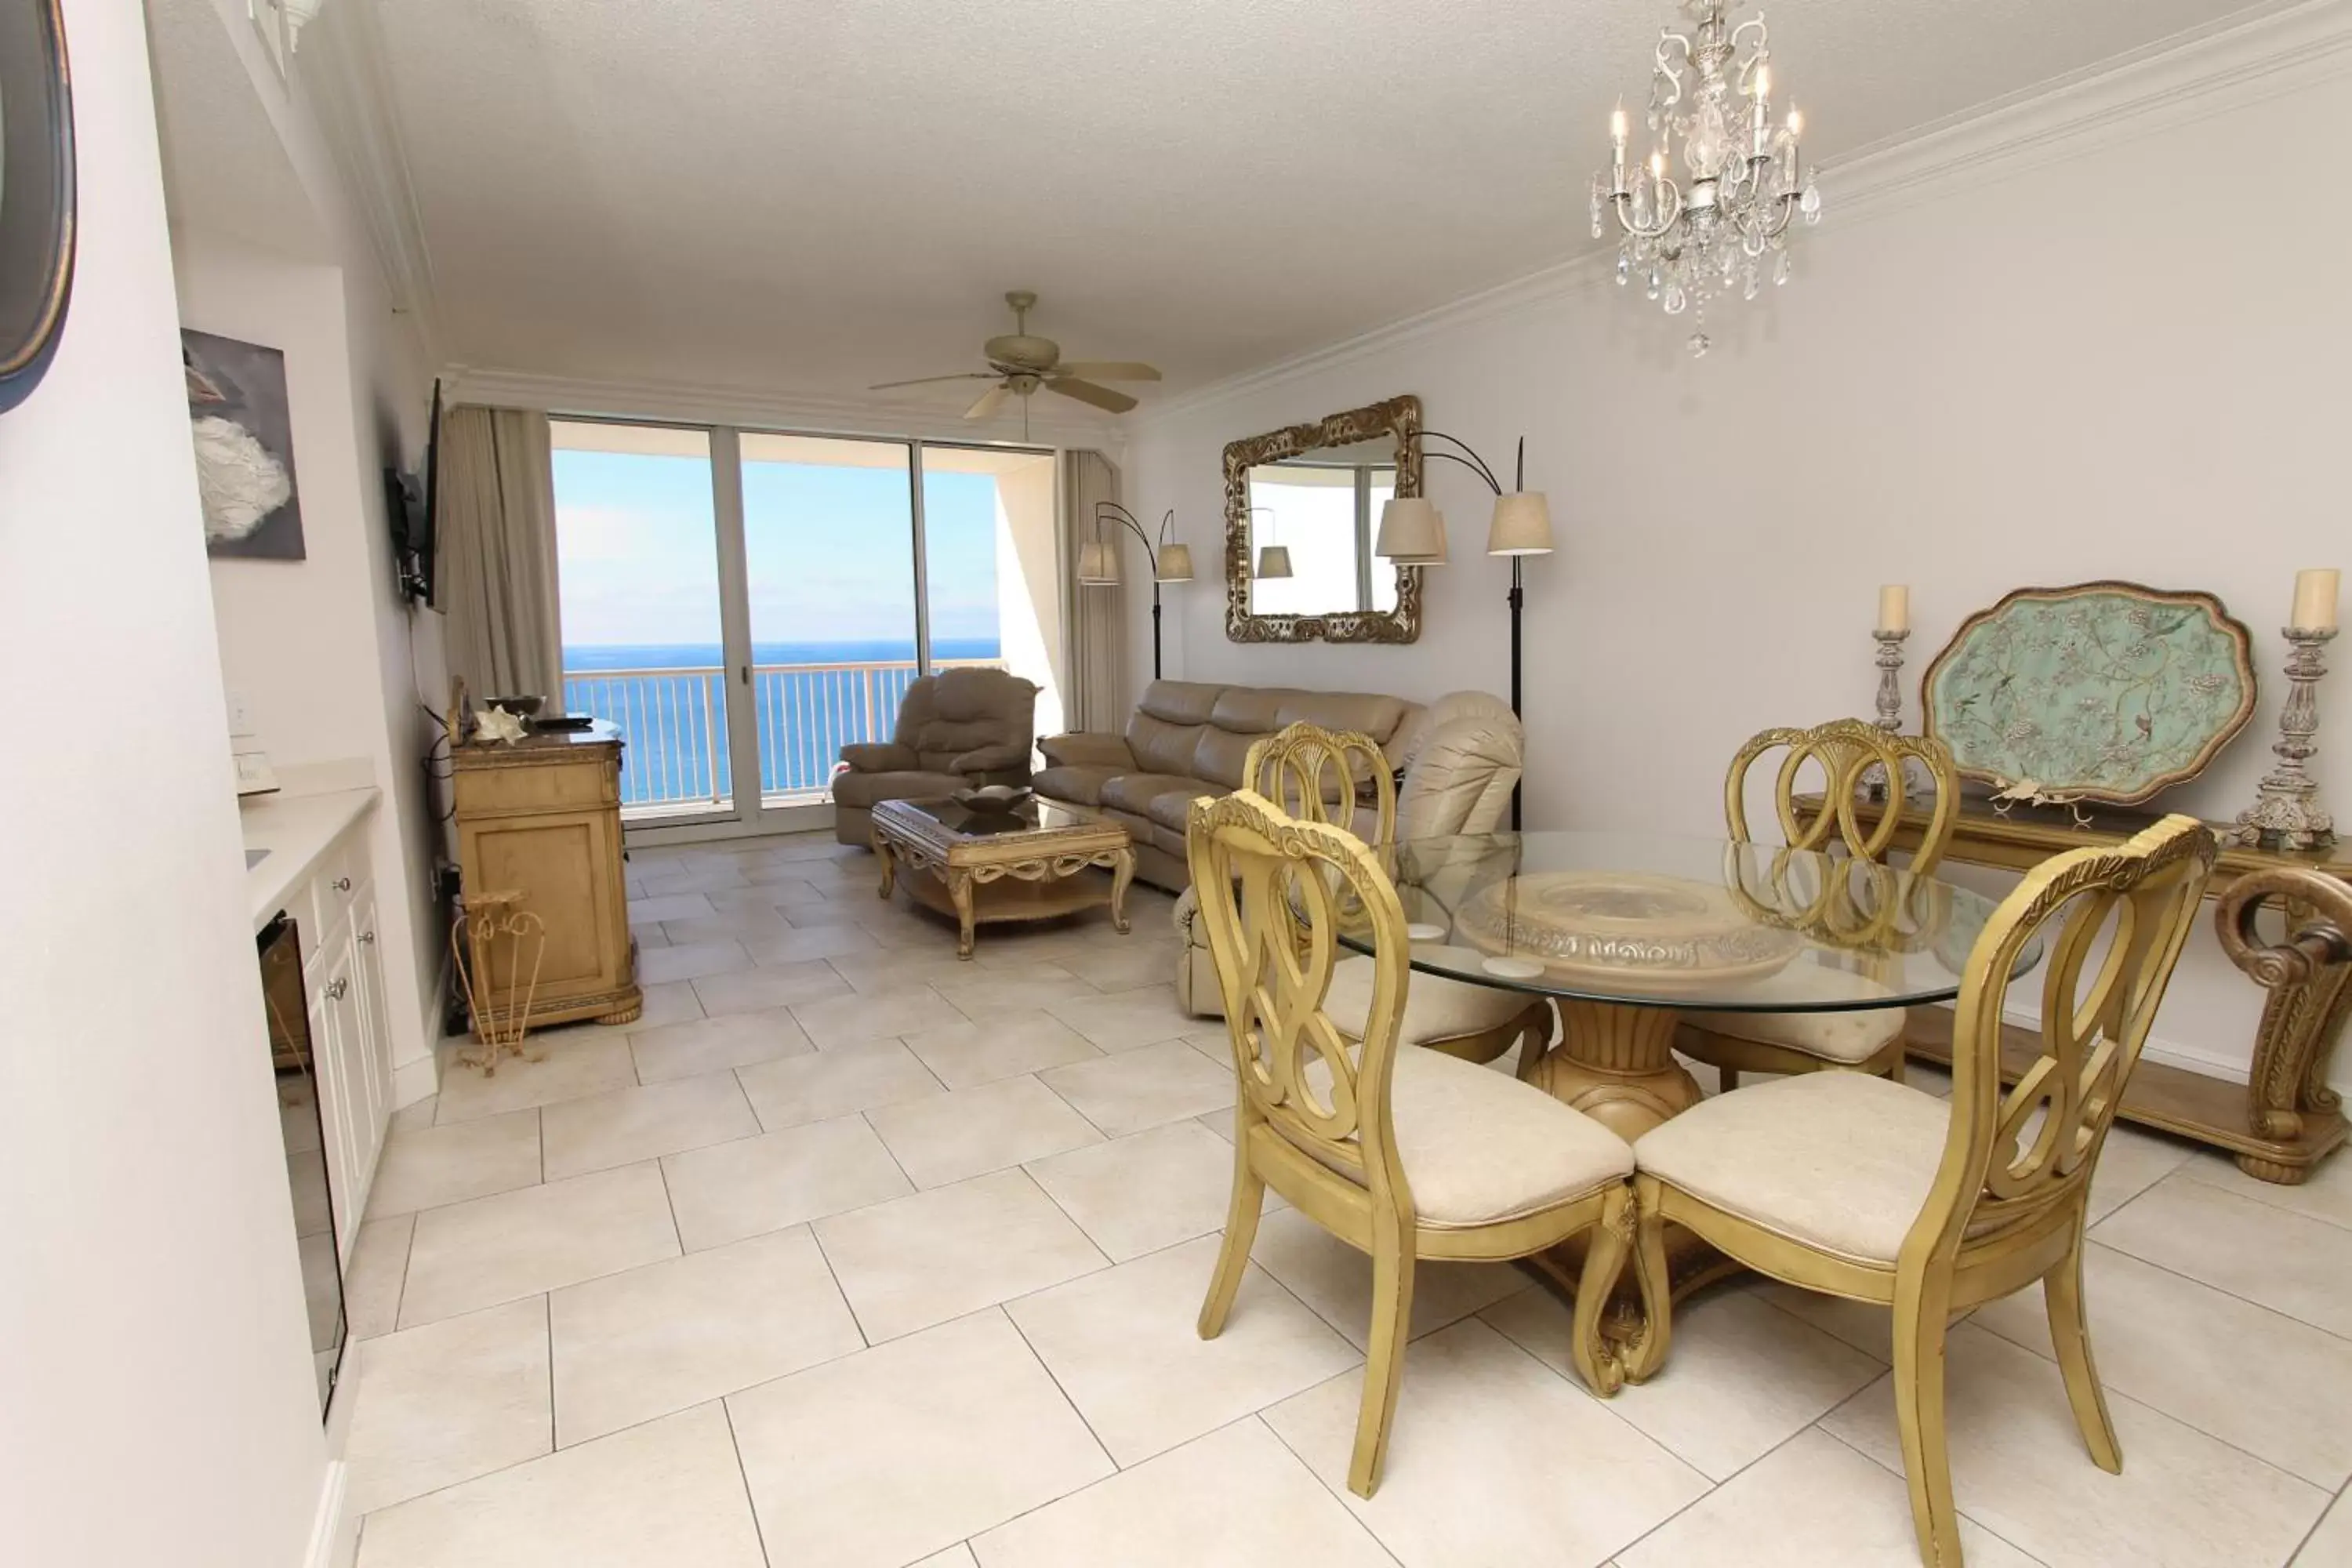 Living room, Dining Area in Majestic Beach Resort, Panama City Beach, Fl